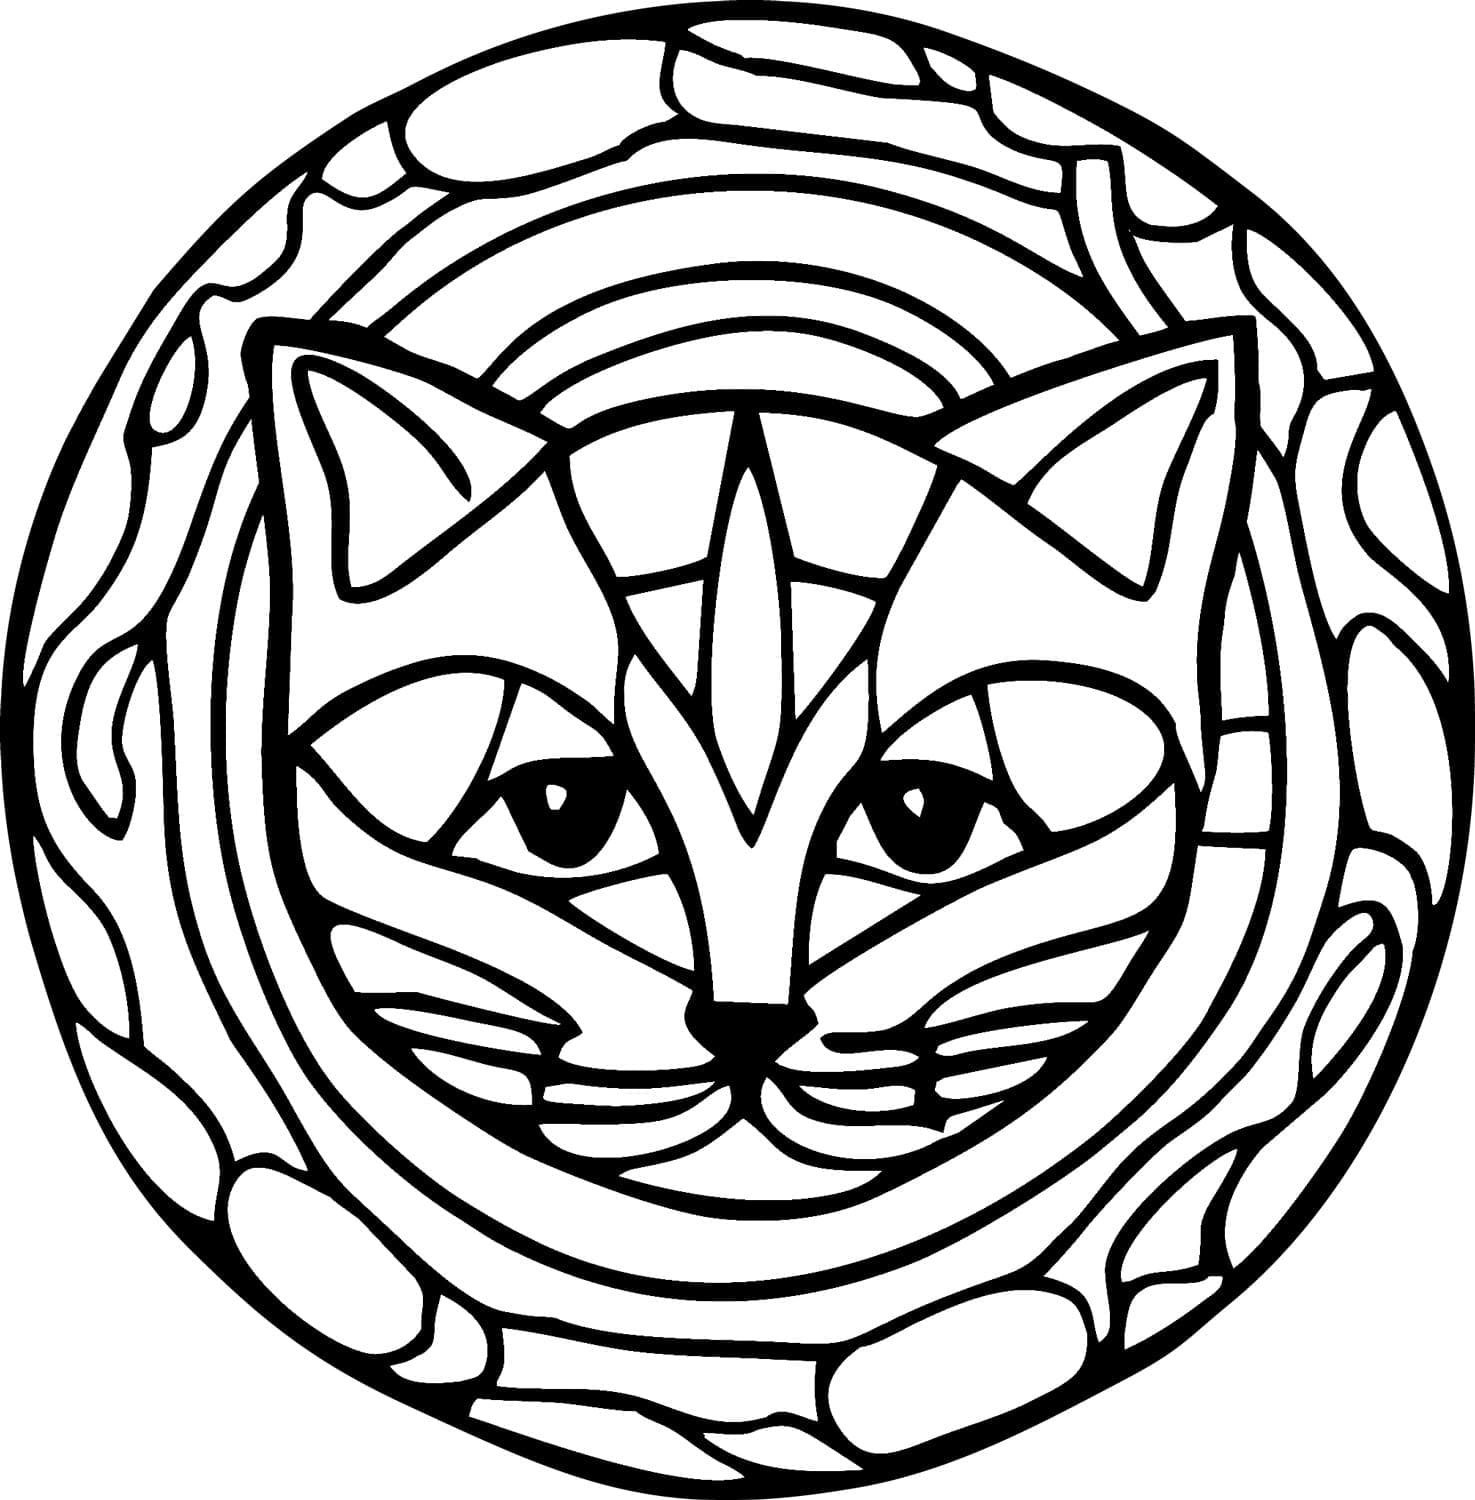 Simple Mandala With Cat Coloring Page Mandalas